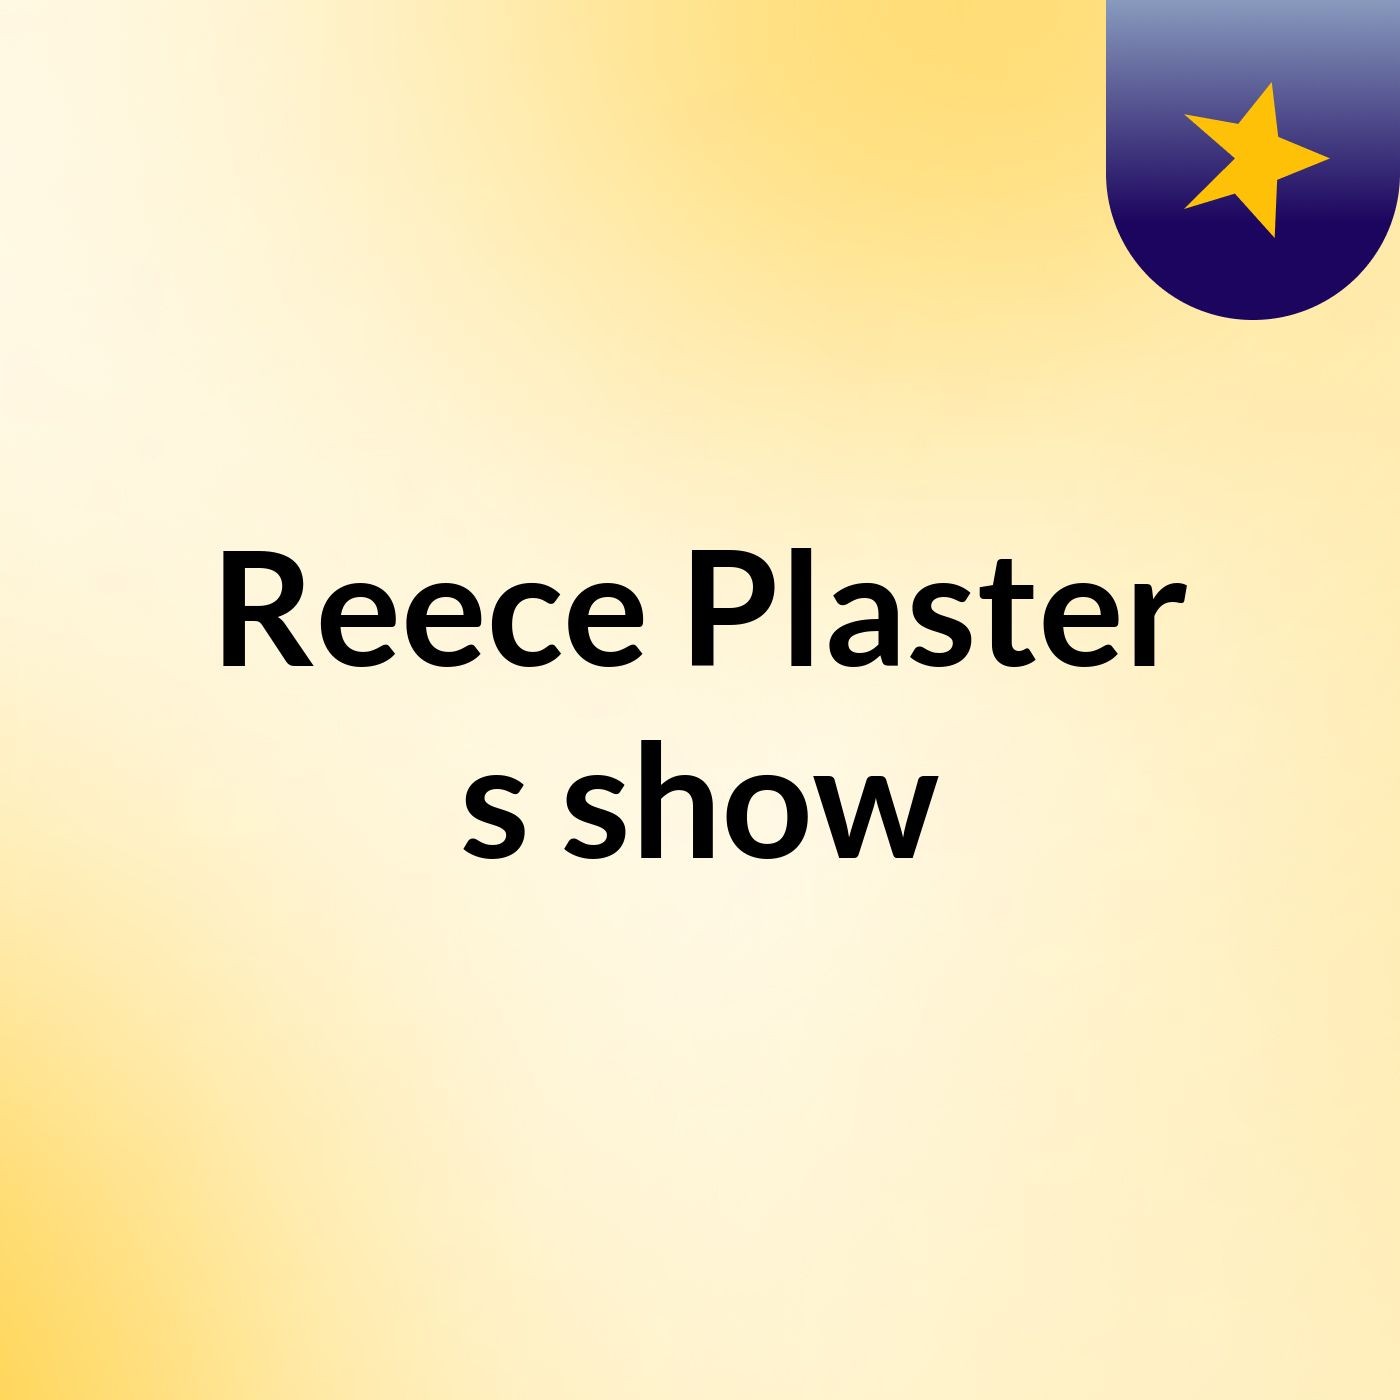 Reece Plaster's show